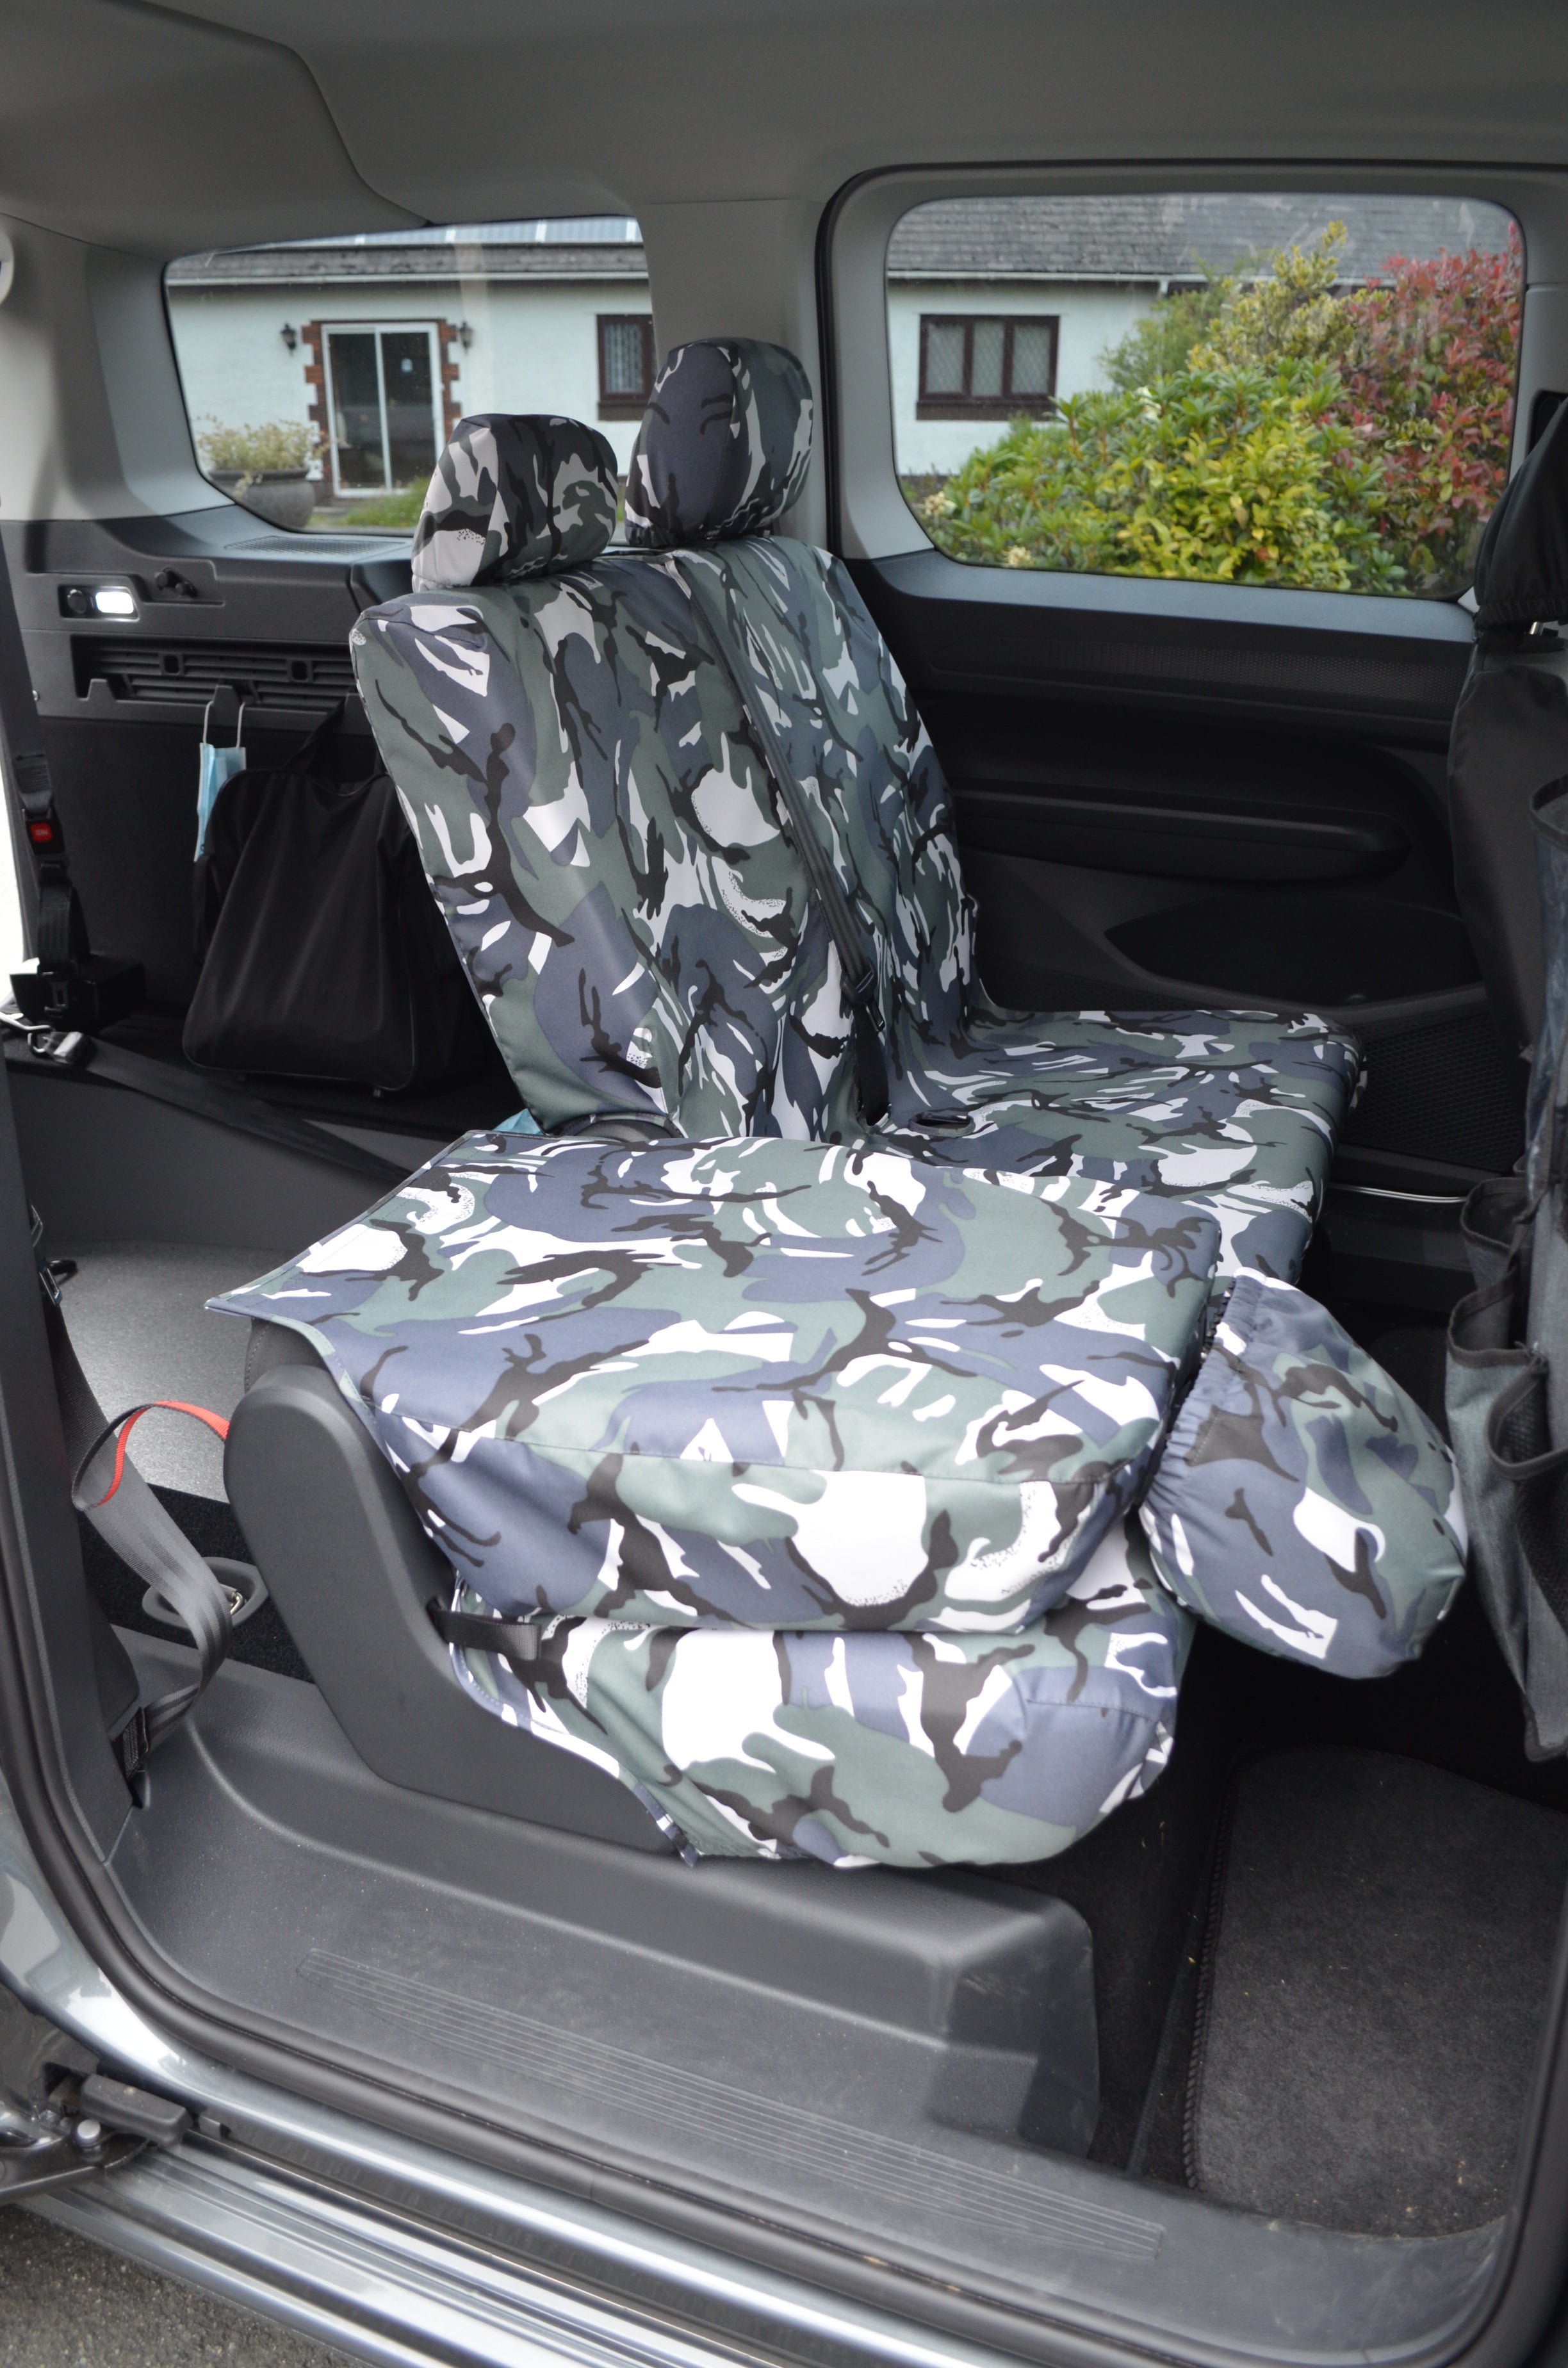 VW Volkswagen Caddy 2021+ Seat Covers